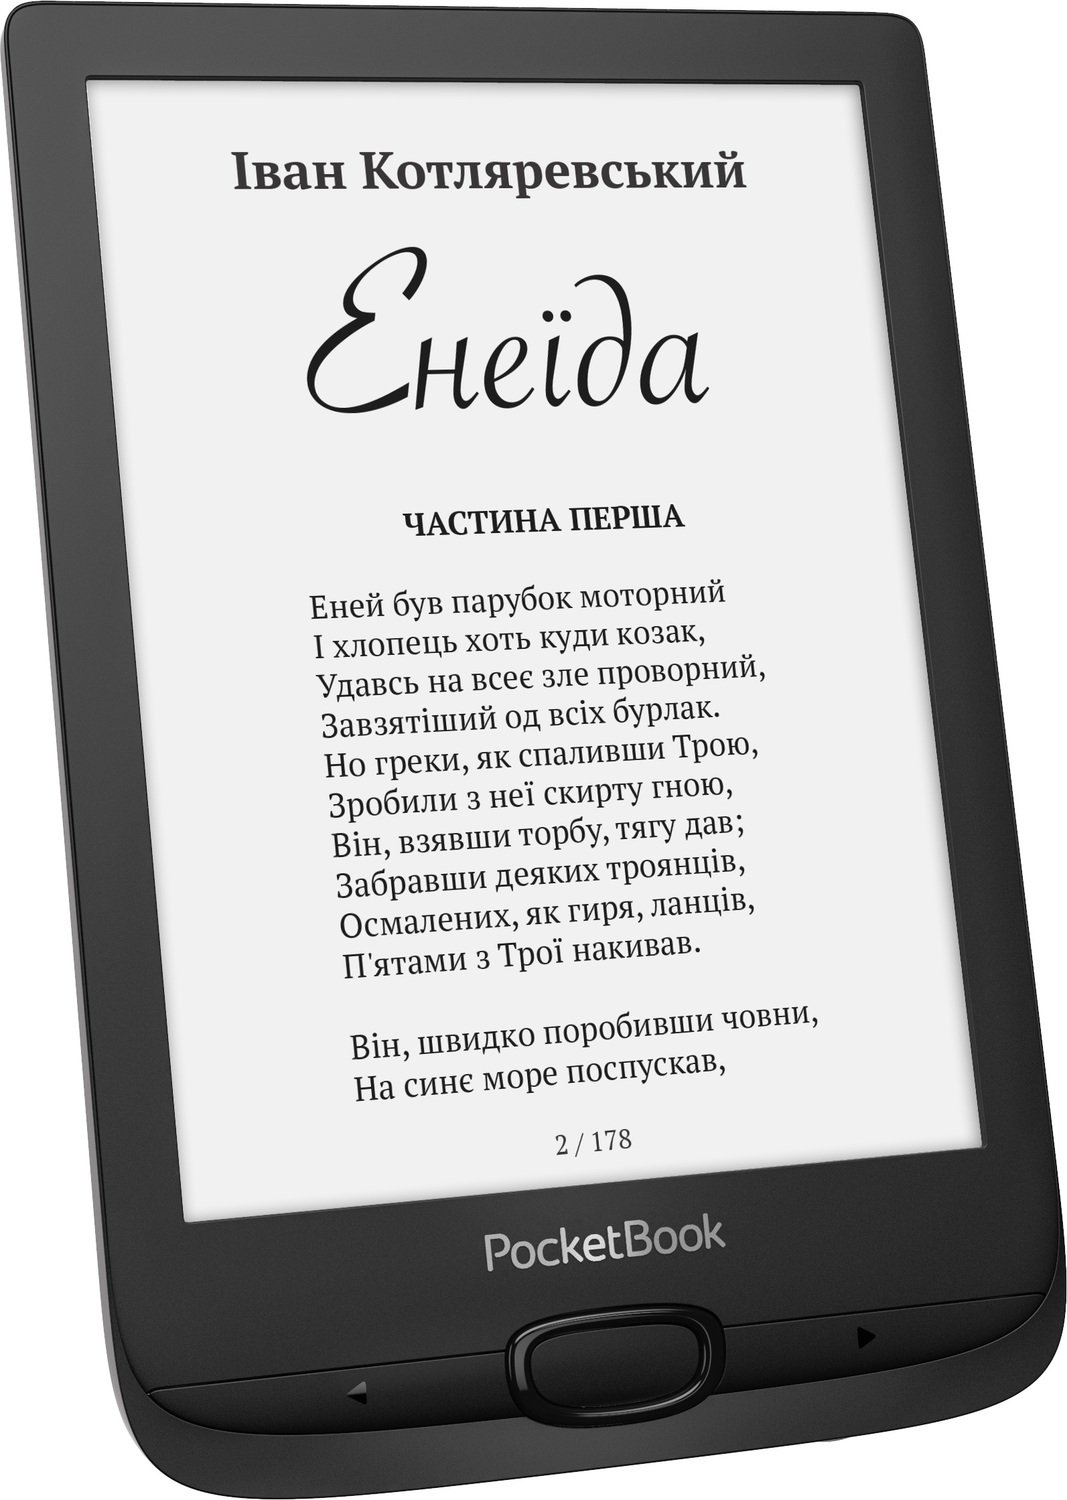 Электронная книга PocketBook 617 Ink Black фото 